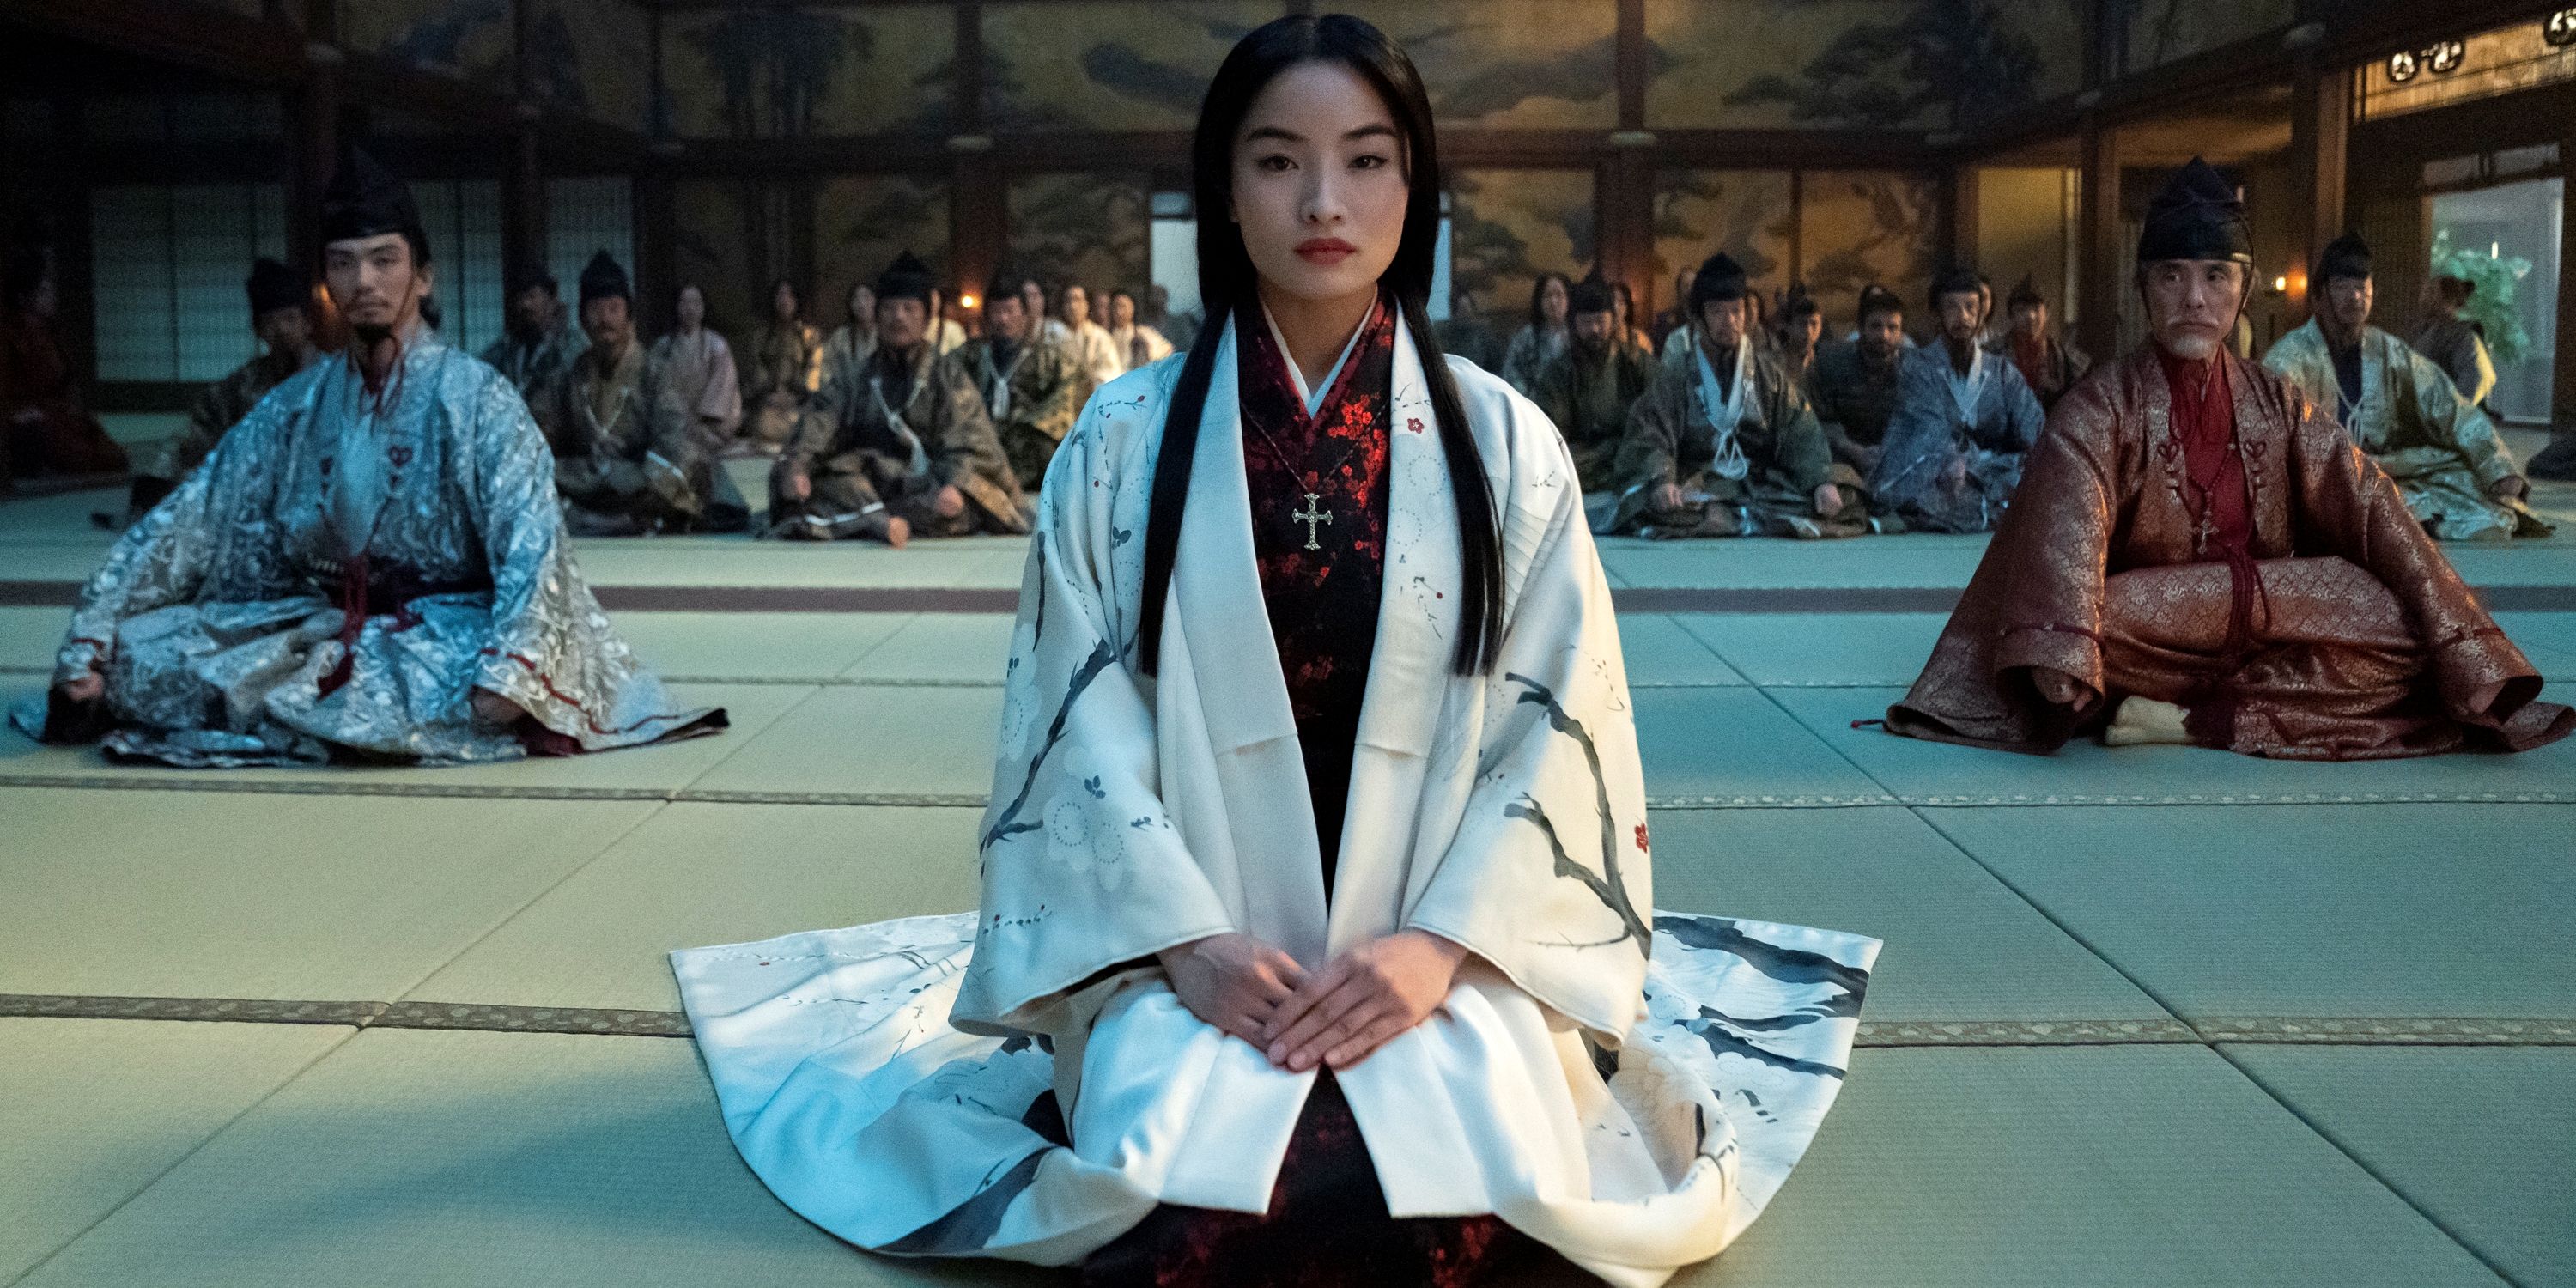 Anna Sawai as Mariko sitting in a white kimono in Episode 9 of Shogun